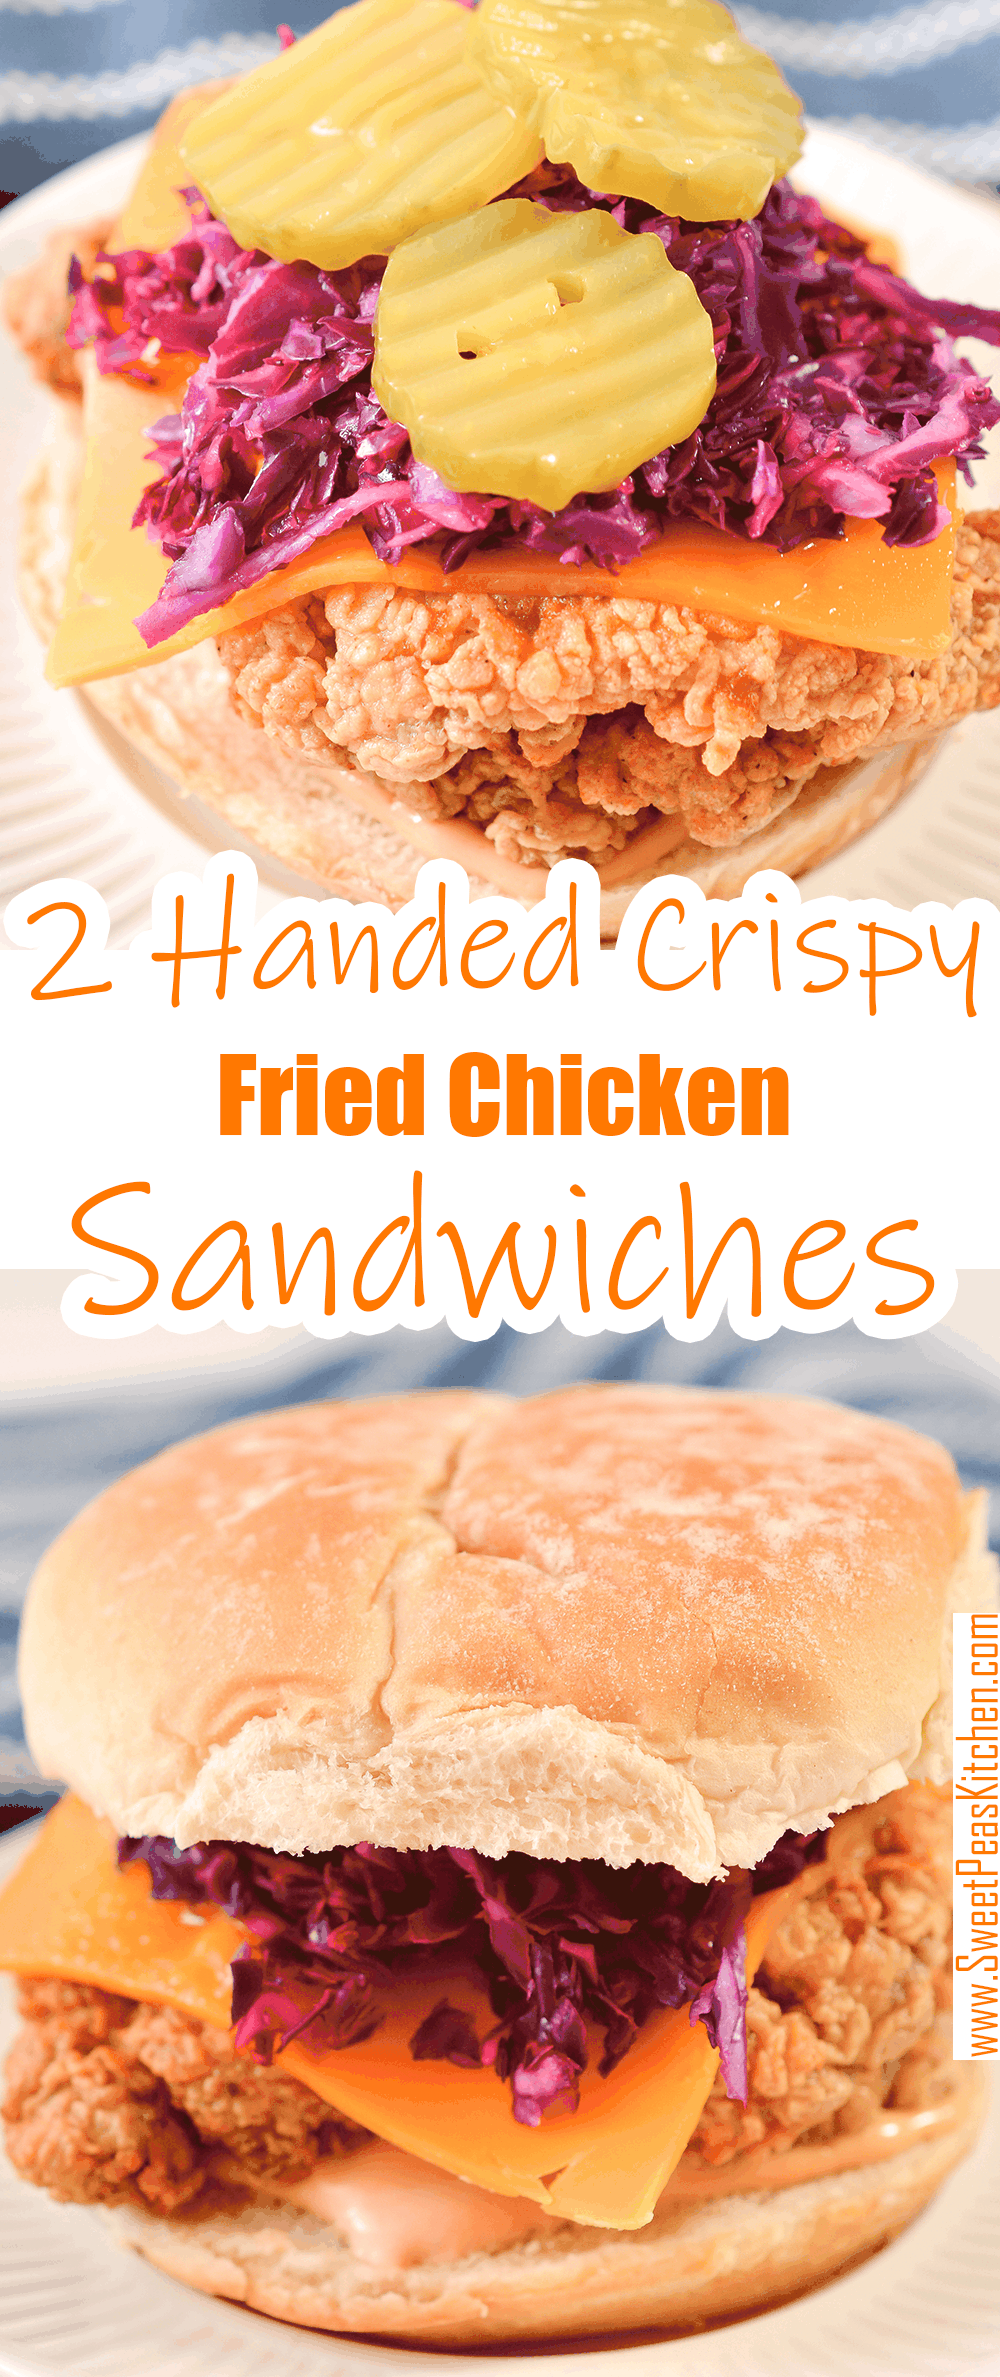 2 Handed Crispy Fried Chicken Sandwiches